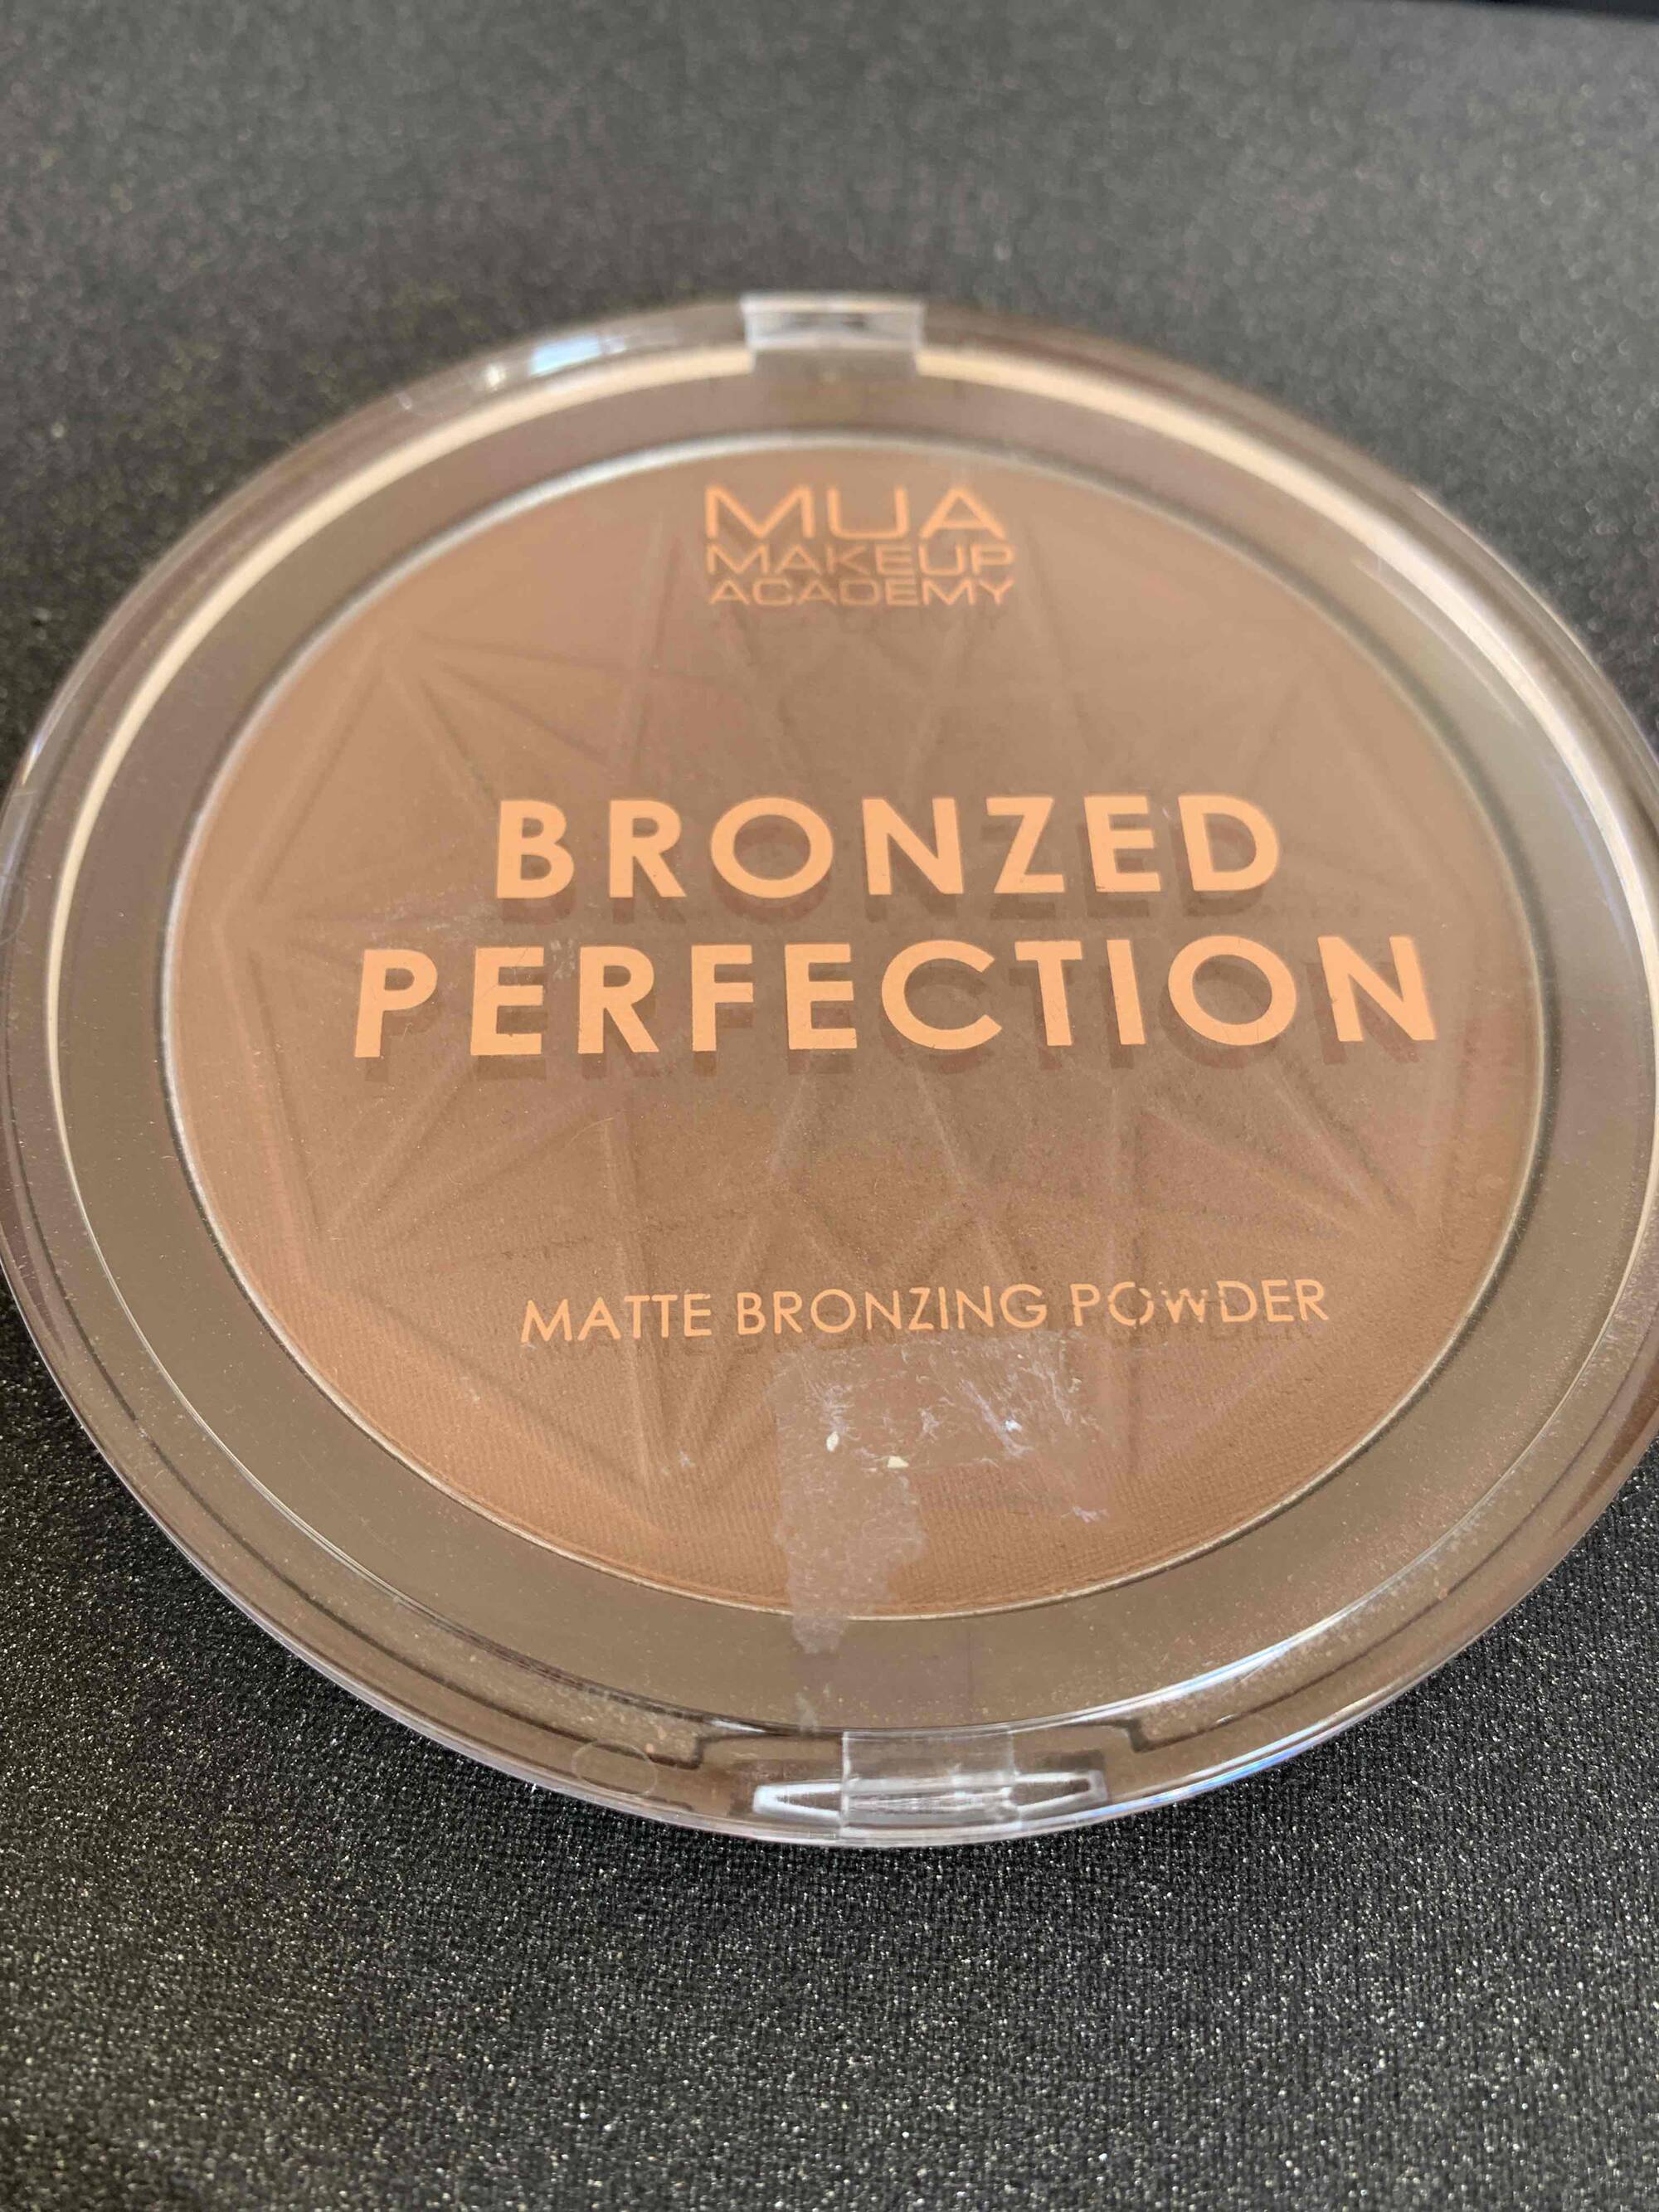 MUA MAKEUP ACADEMY - Bronzed perfection - Matte bronzing powder